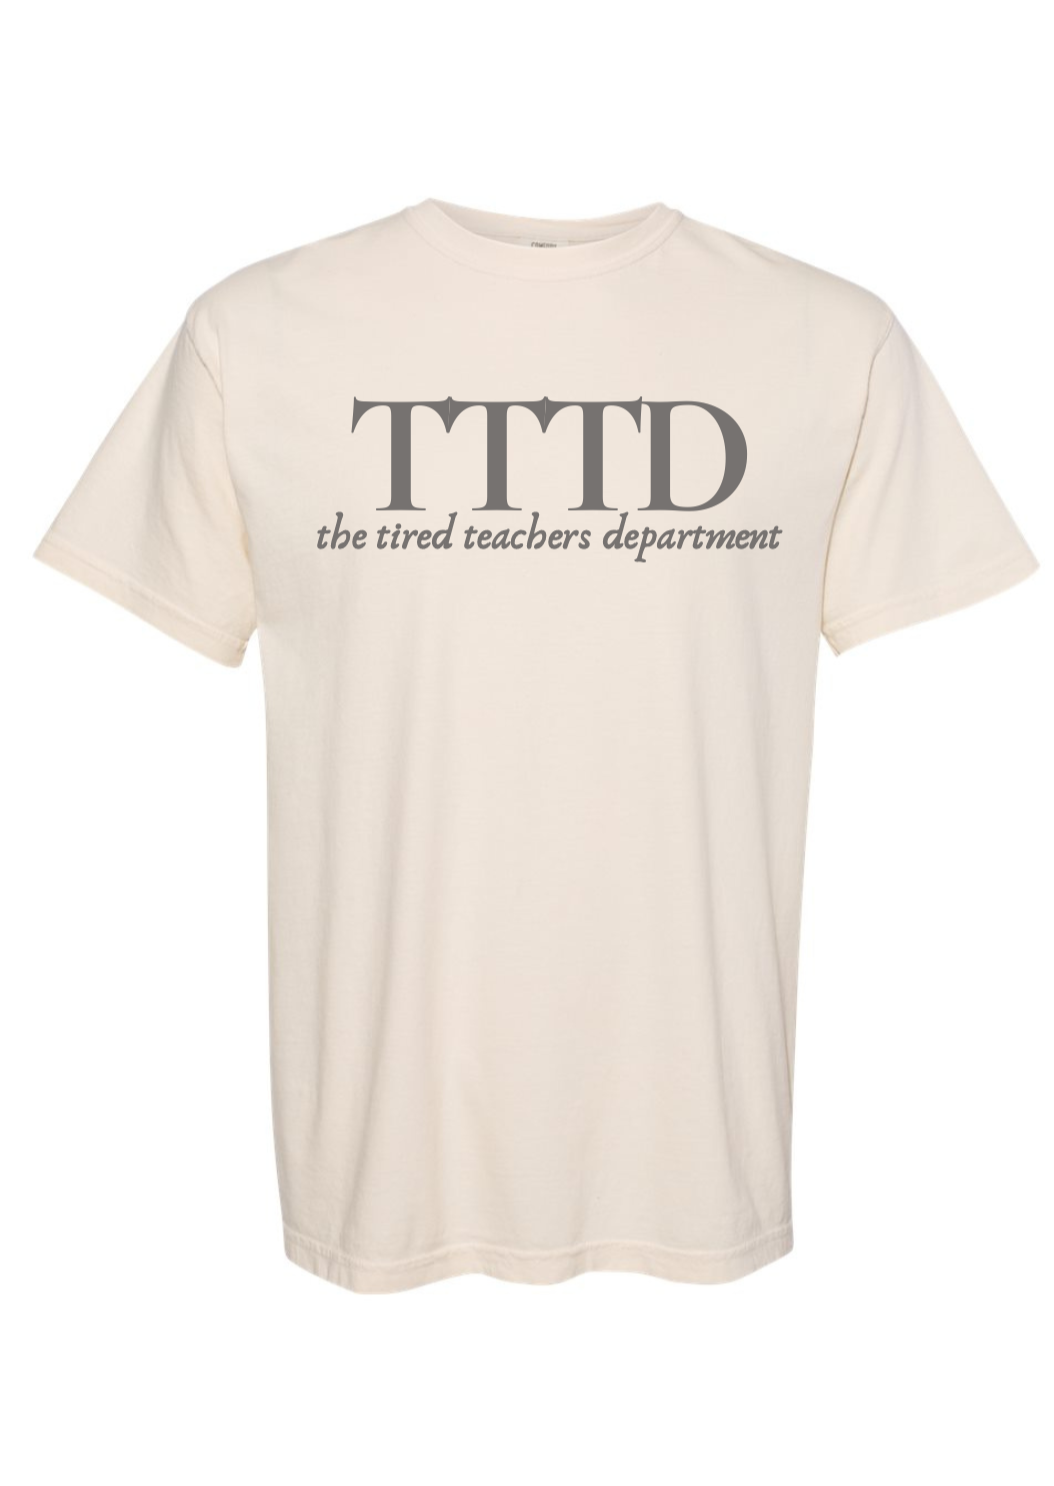 the tired teachers department t-shirt (typewriter)